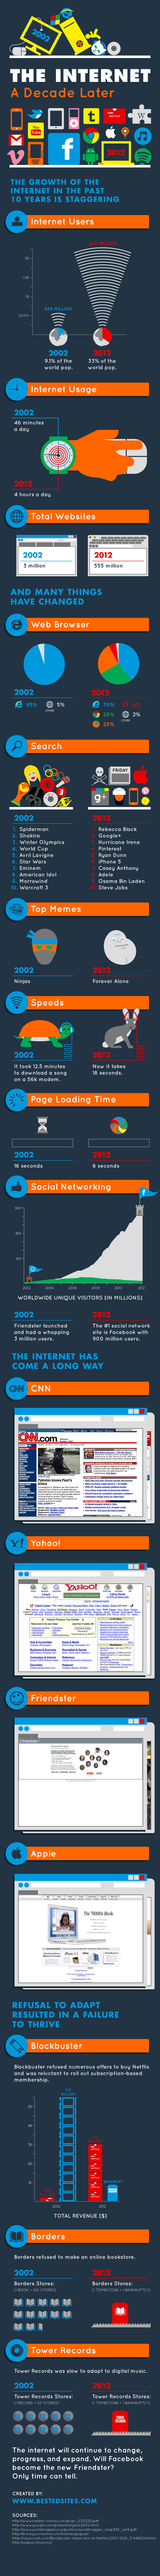 10 godina interneta [infografik]